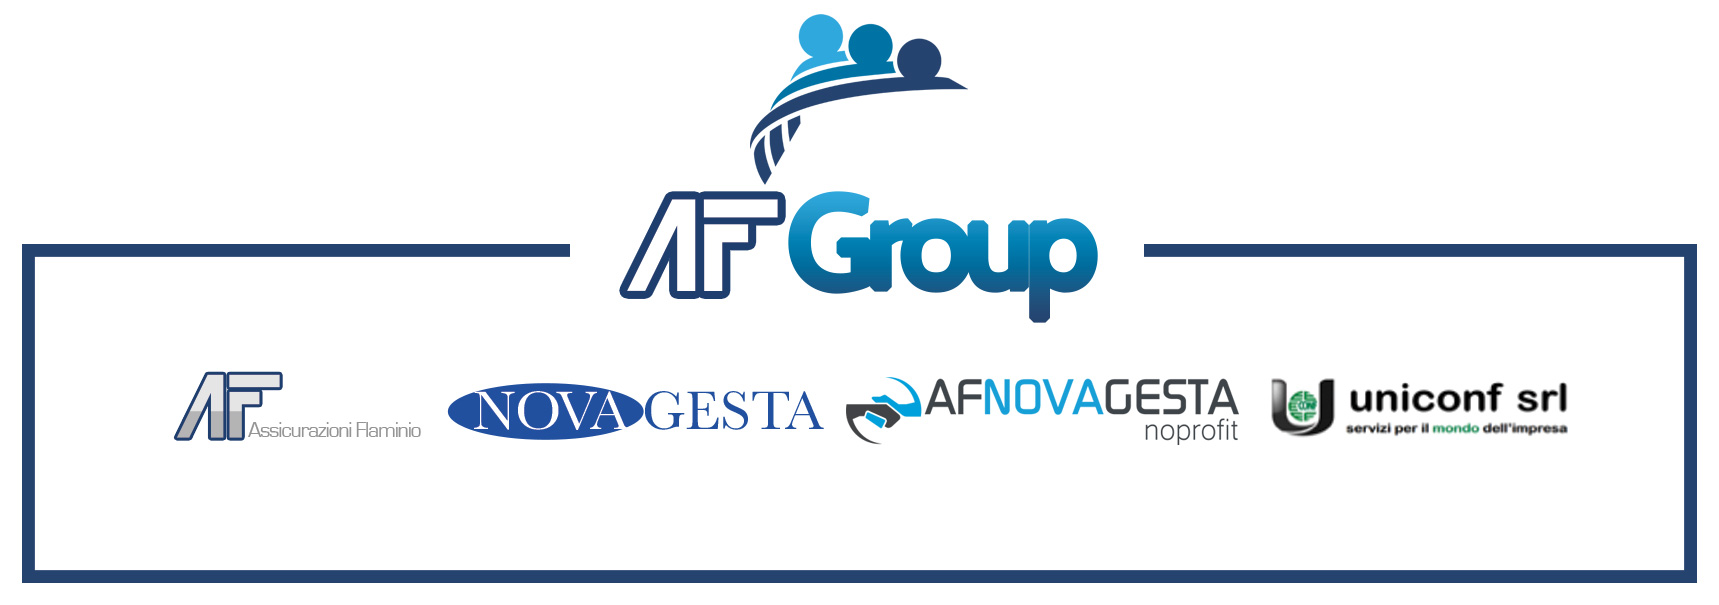 AF Group aziende assiflaminio e novagesta network